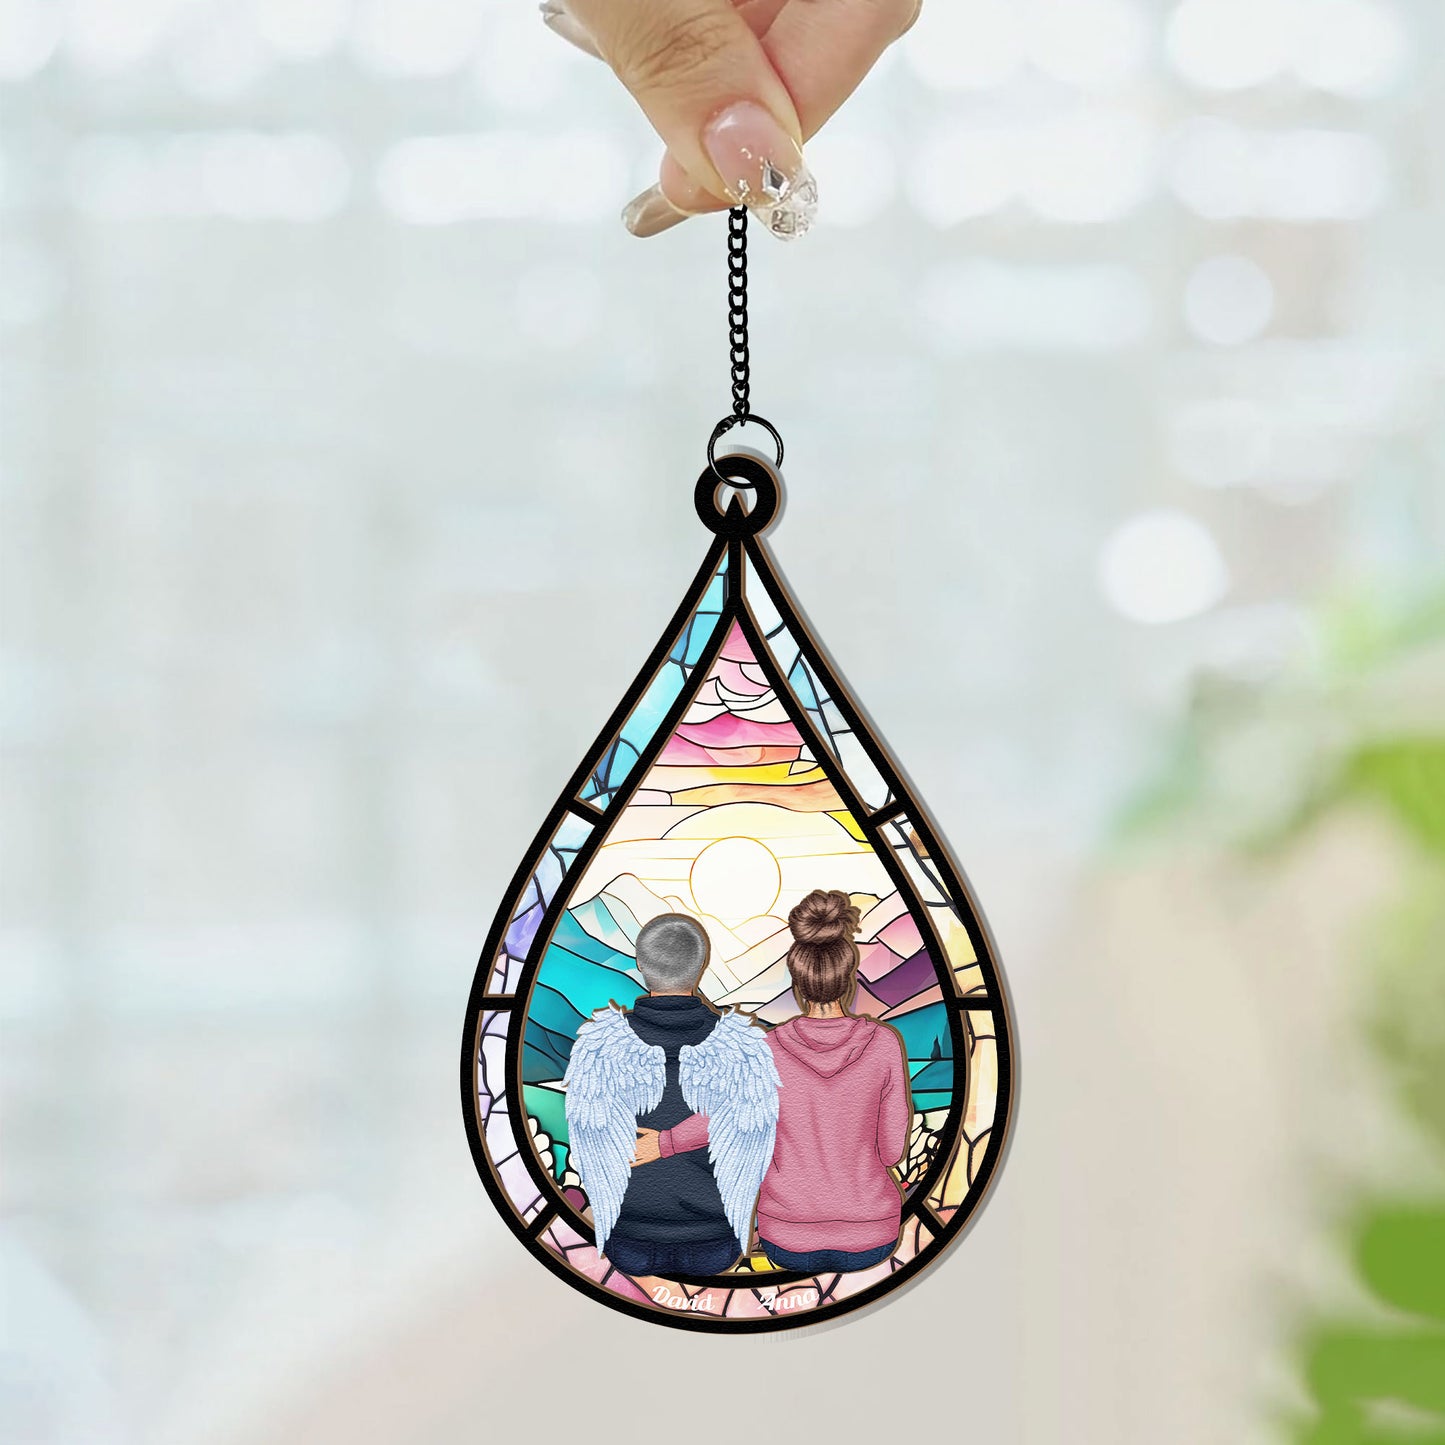 Memorial Teardrop Gift - Personalized Window Hanging Suncatcher Ornament